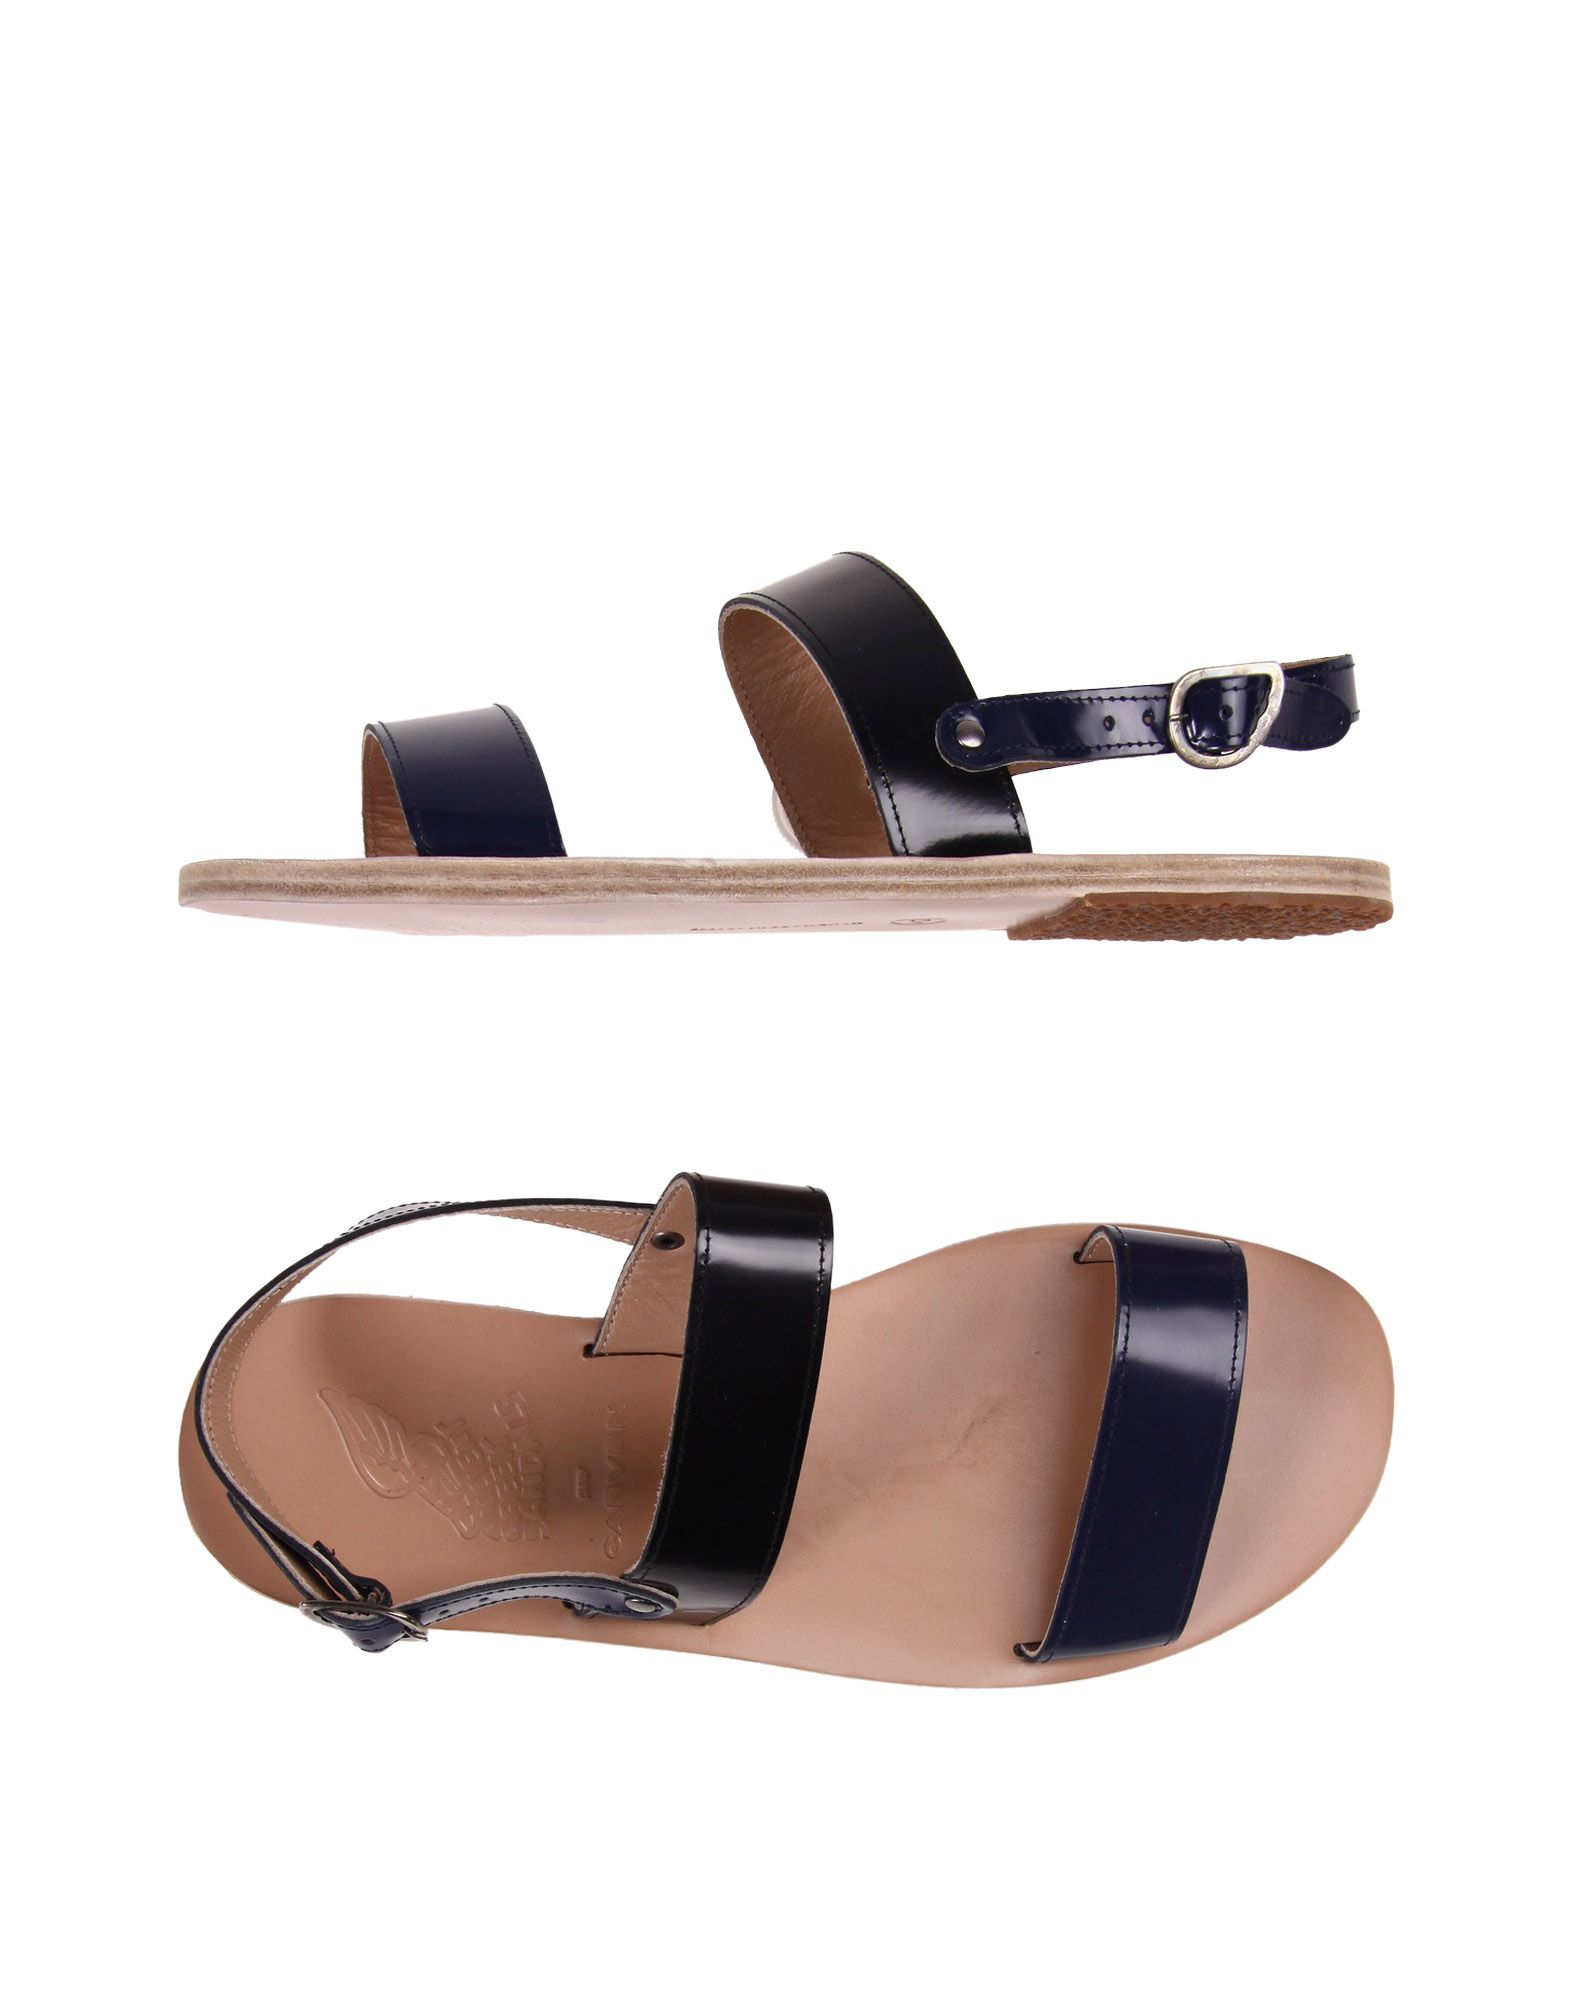 Lyst - Ancient greek sandals Sandals in Blue for Men